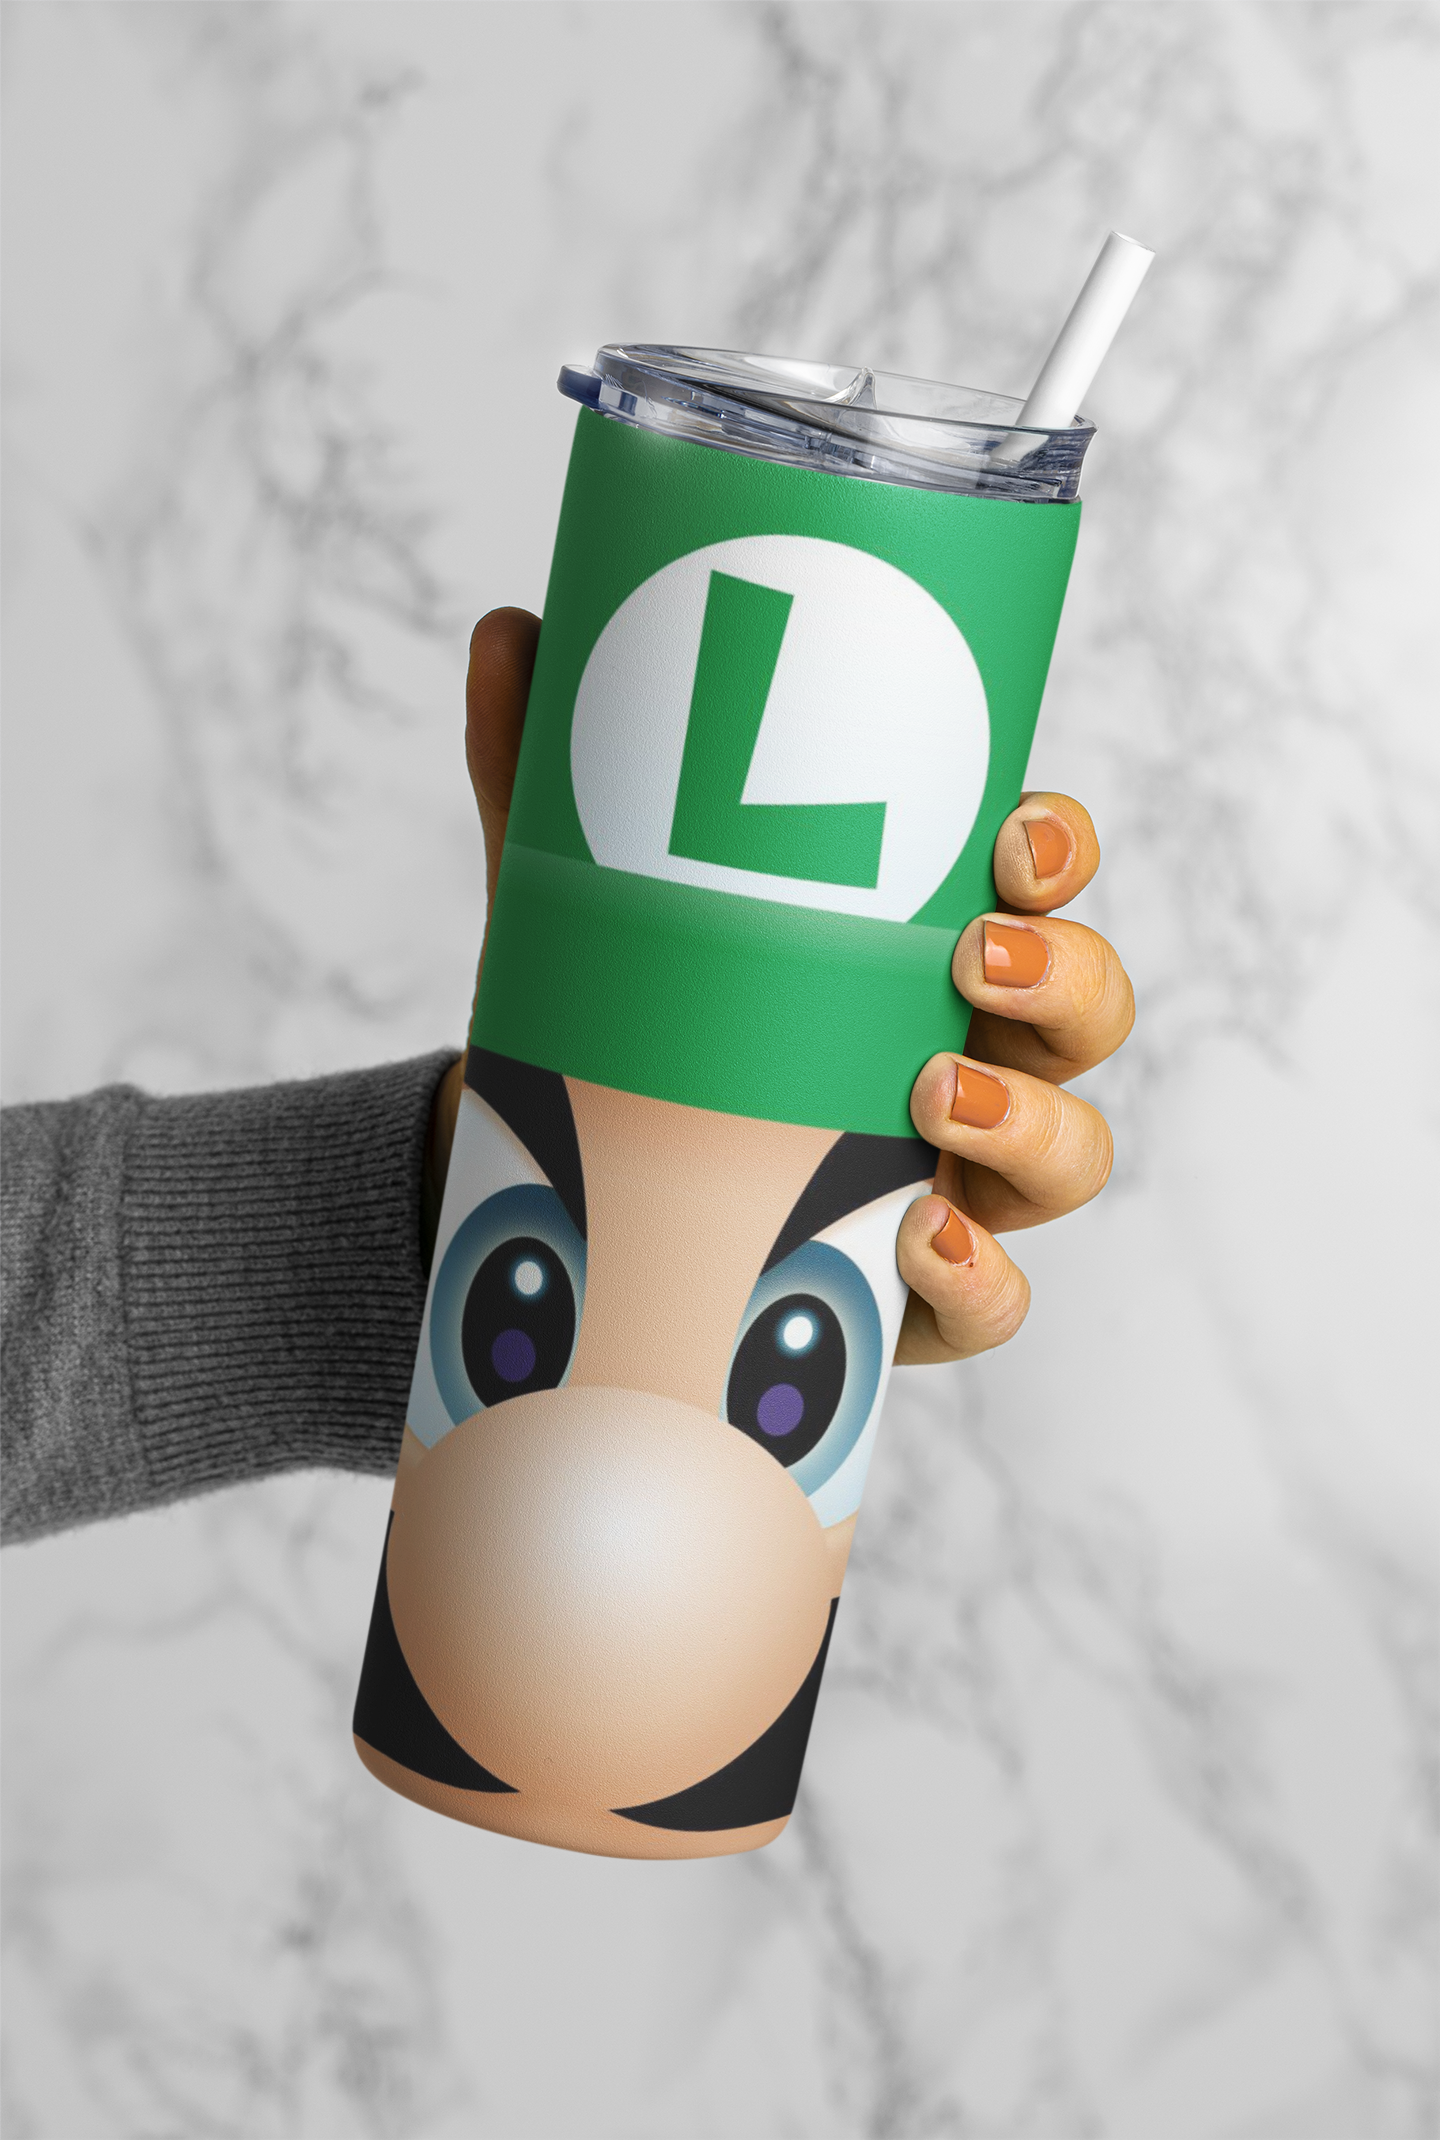 Luigi